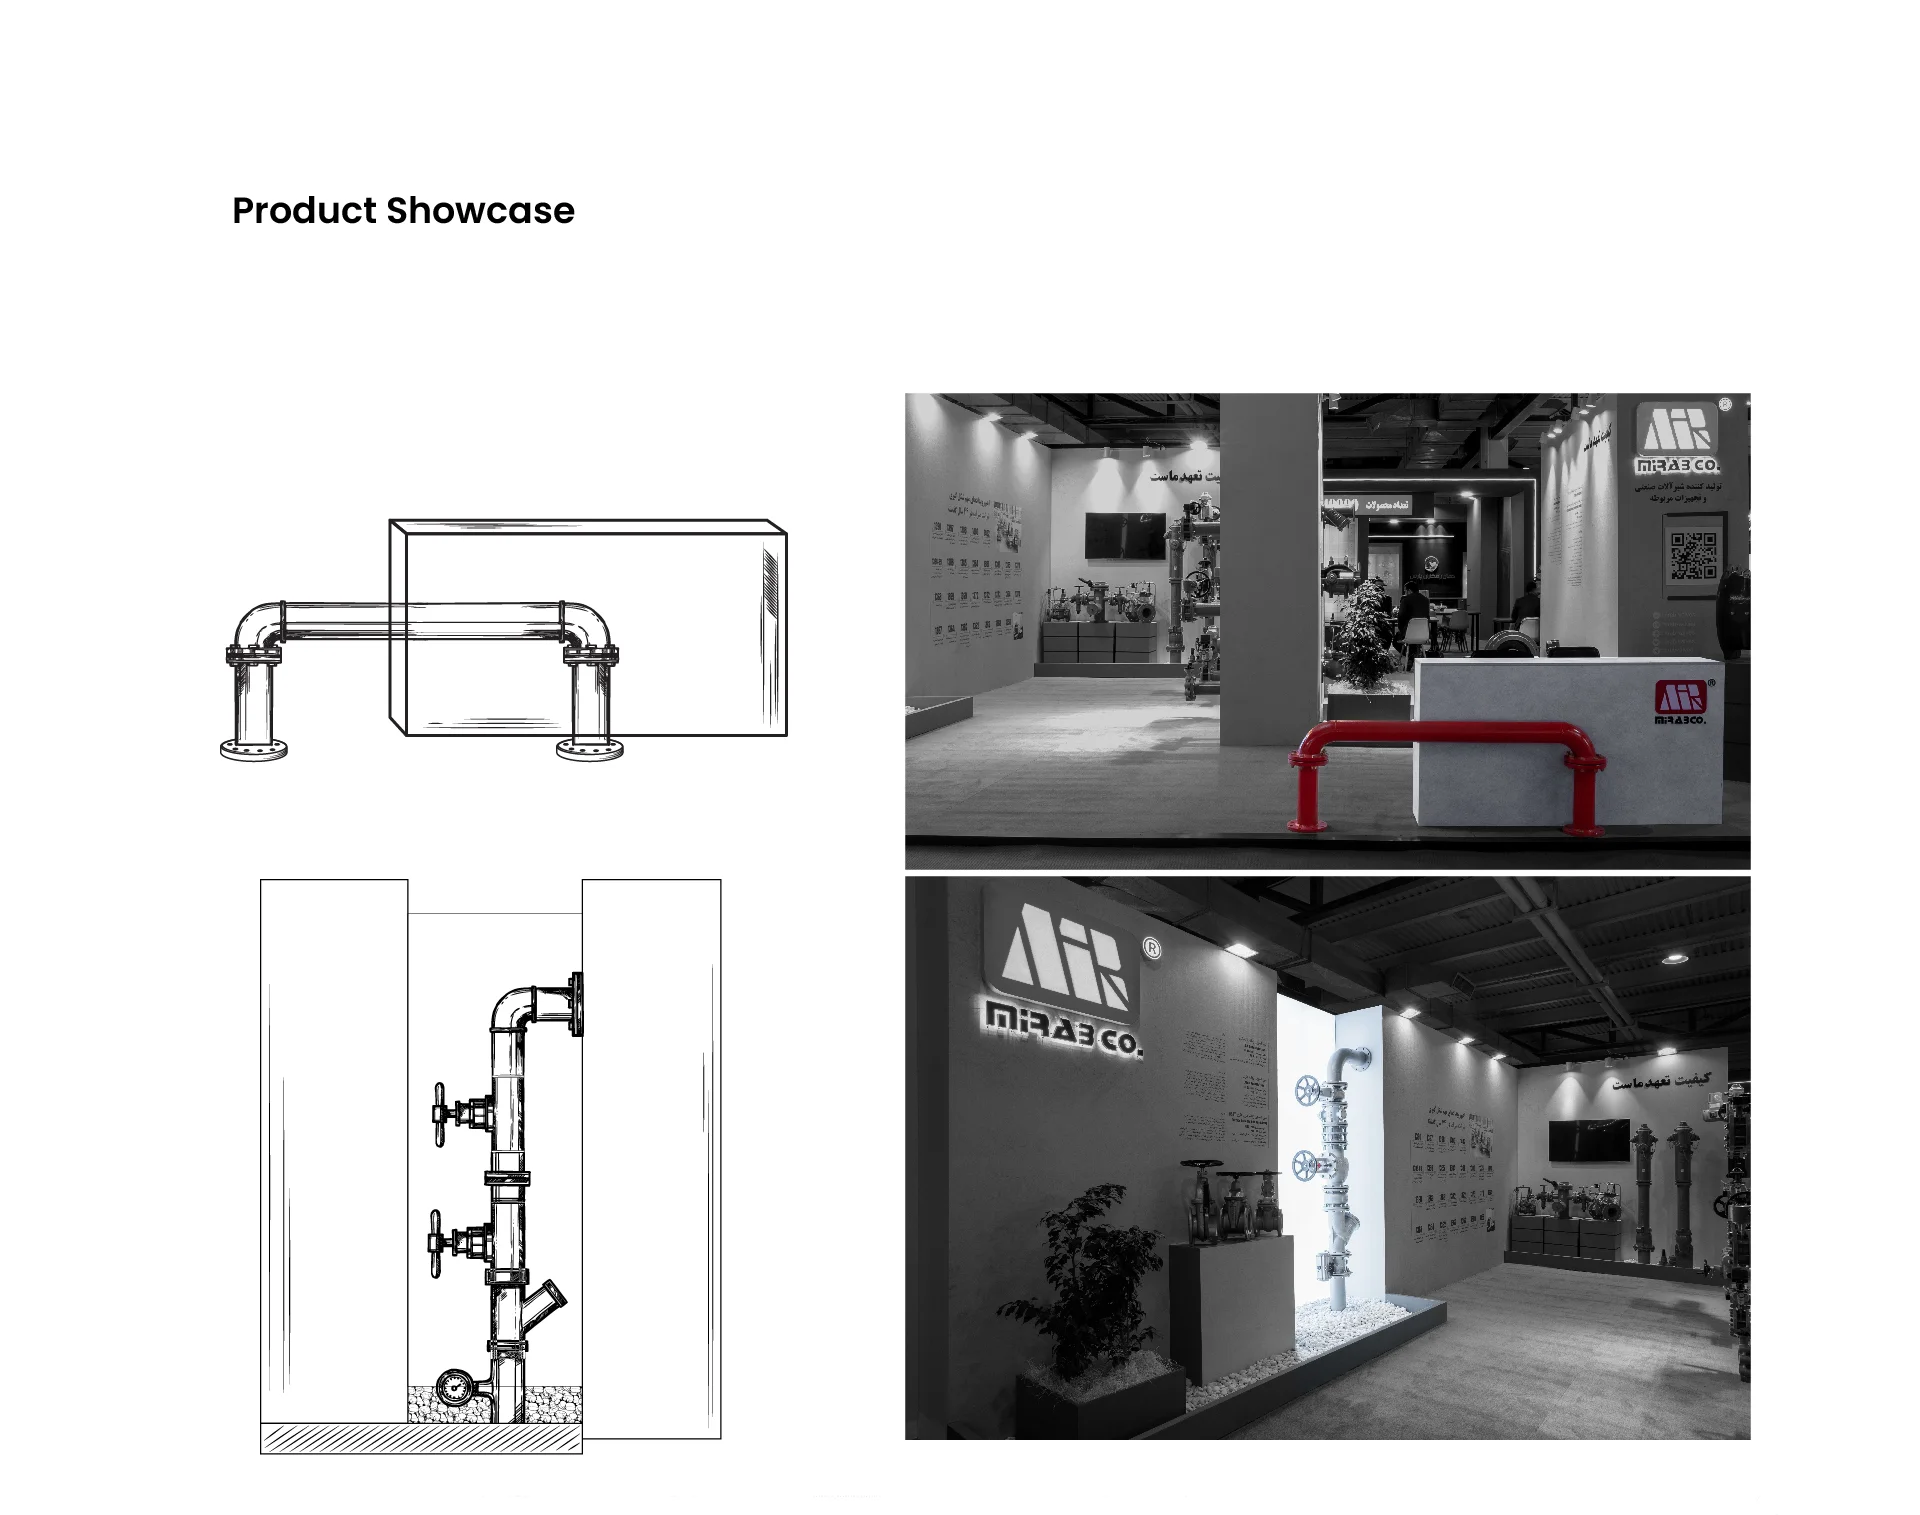   Mirab-presentation-03 طراحی غرفه و غرفه سازی نمایشگاهی میراب نمایشگاه تاسیسات ساختمان ، سیستم های سرمایشی و گرمایشی 1402 